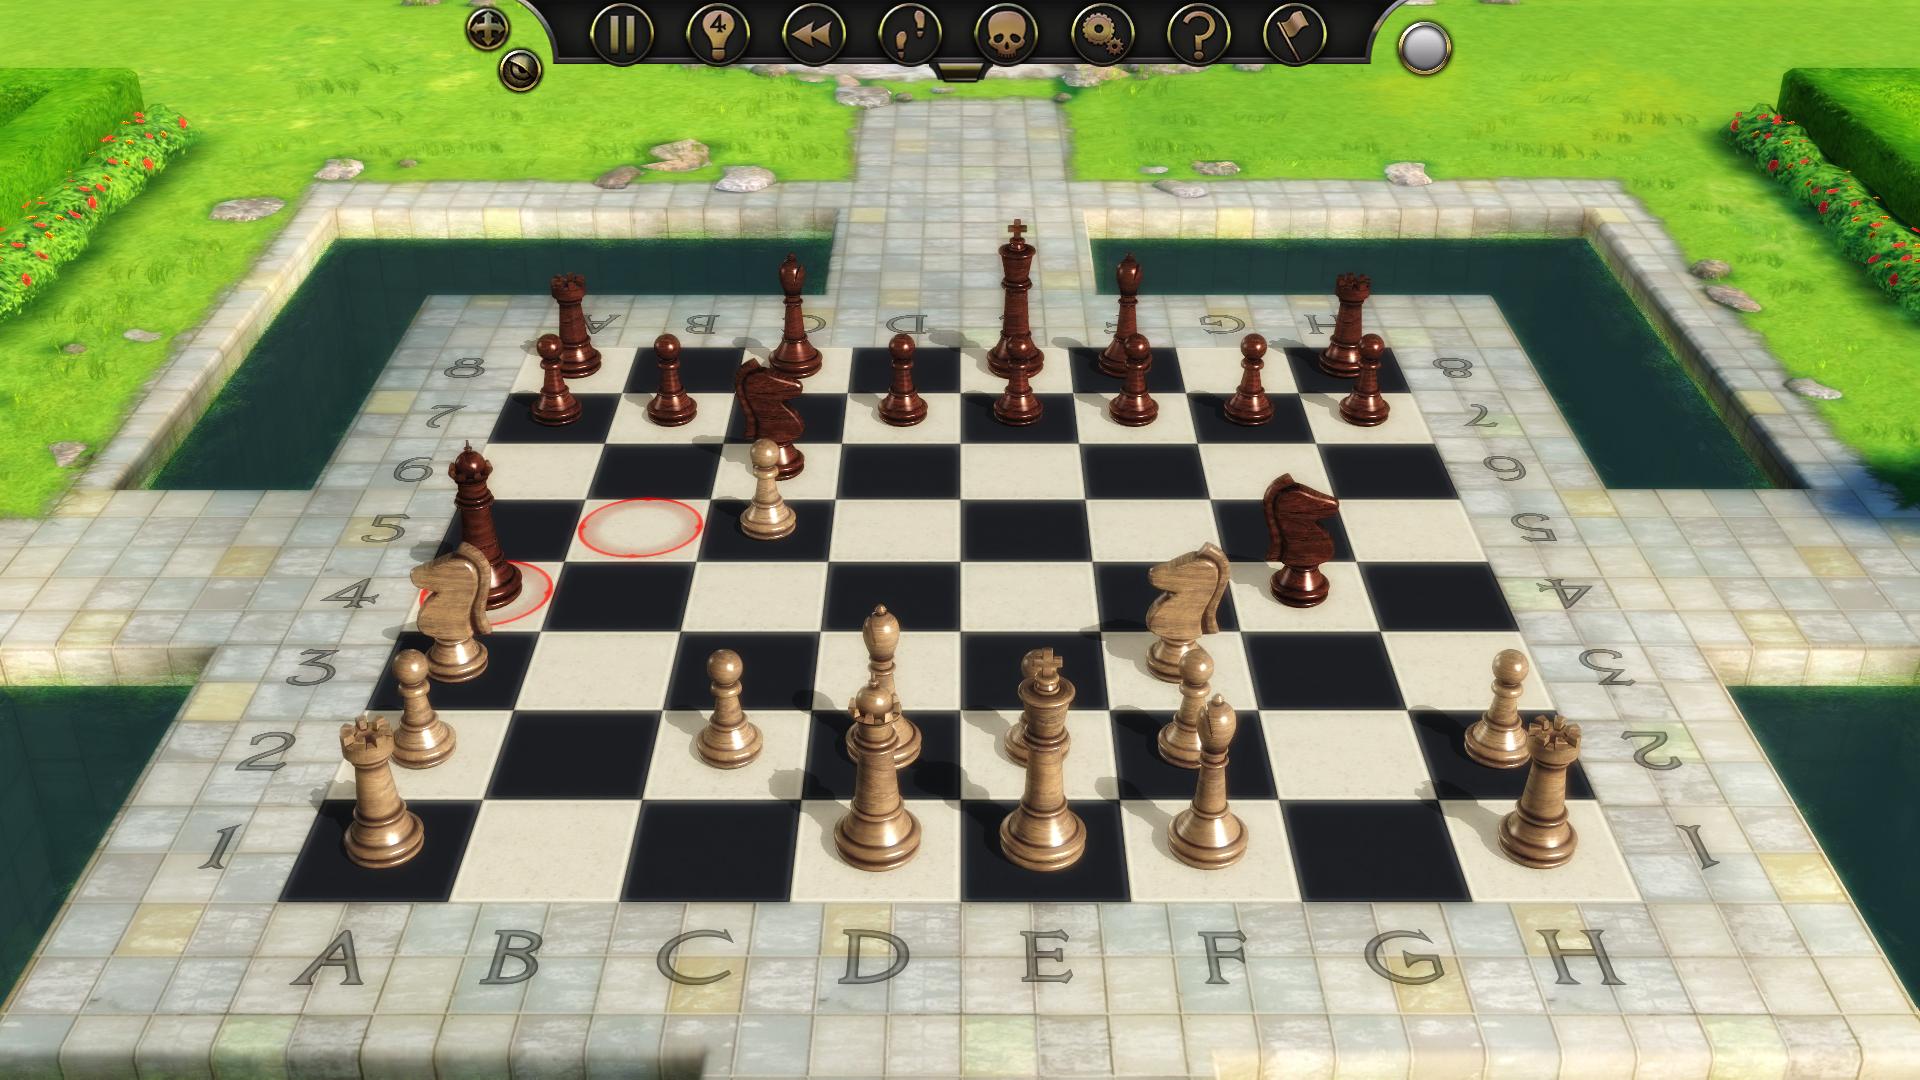 Battle Chess: Game of Kings screenshot